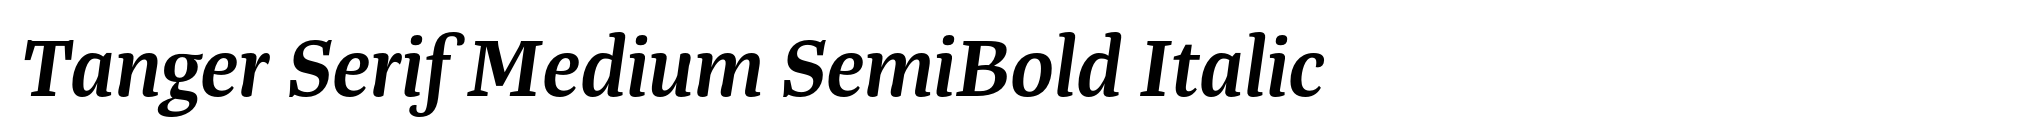 Tanger Serif Medium SemiBold Italic image